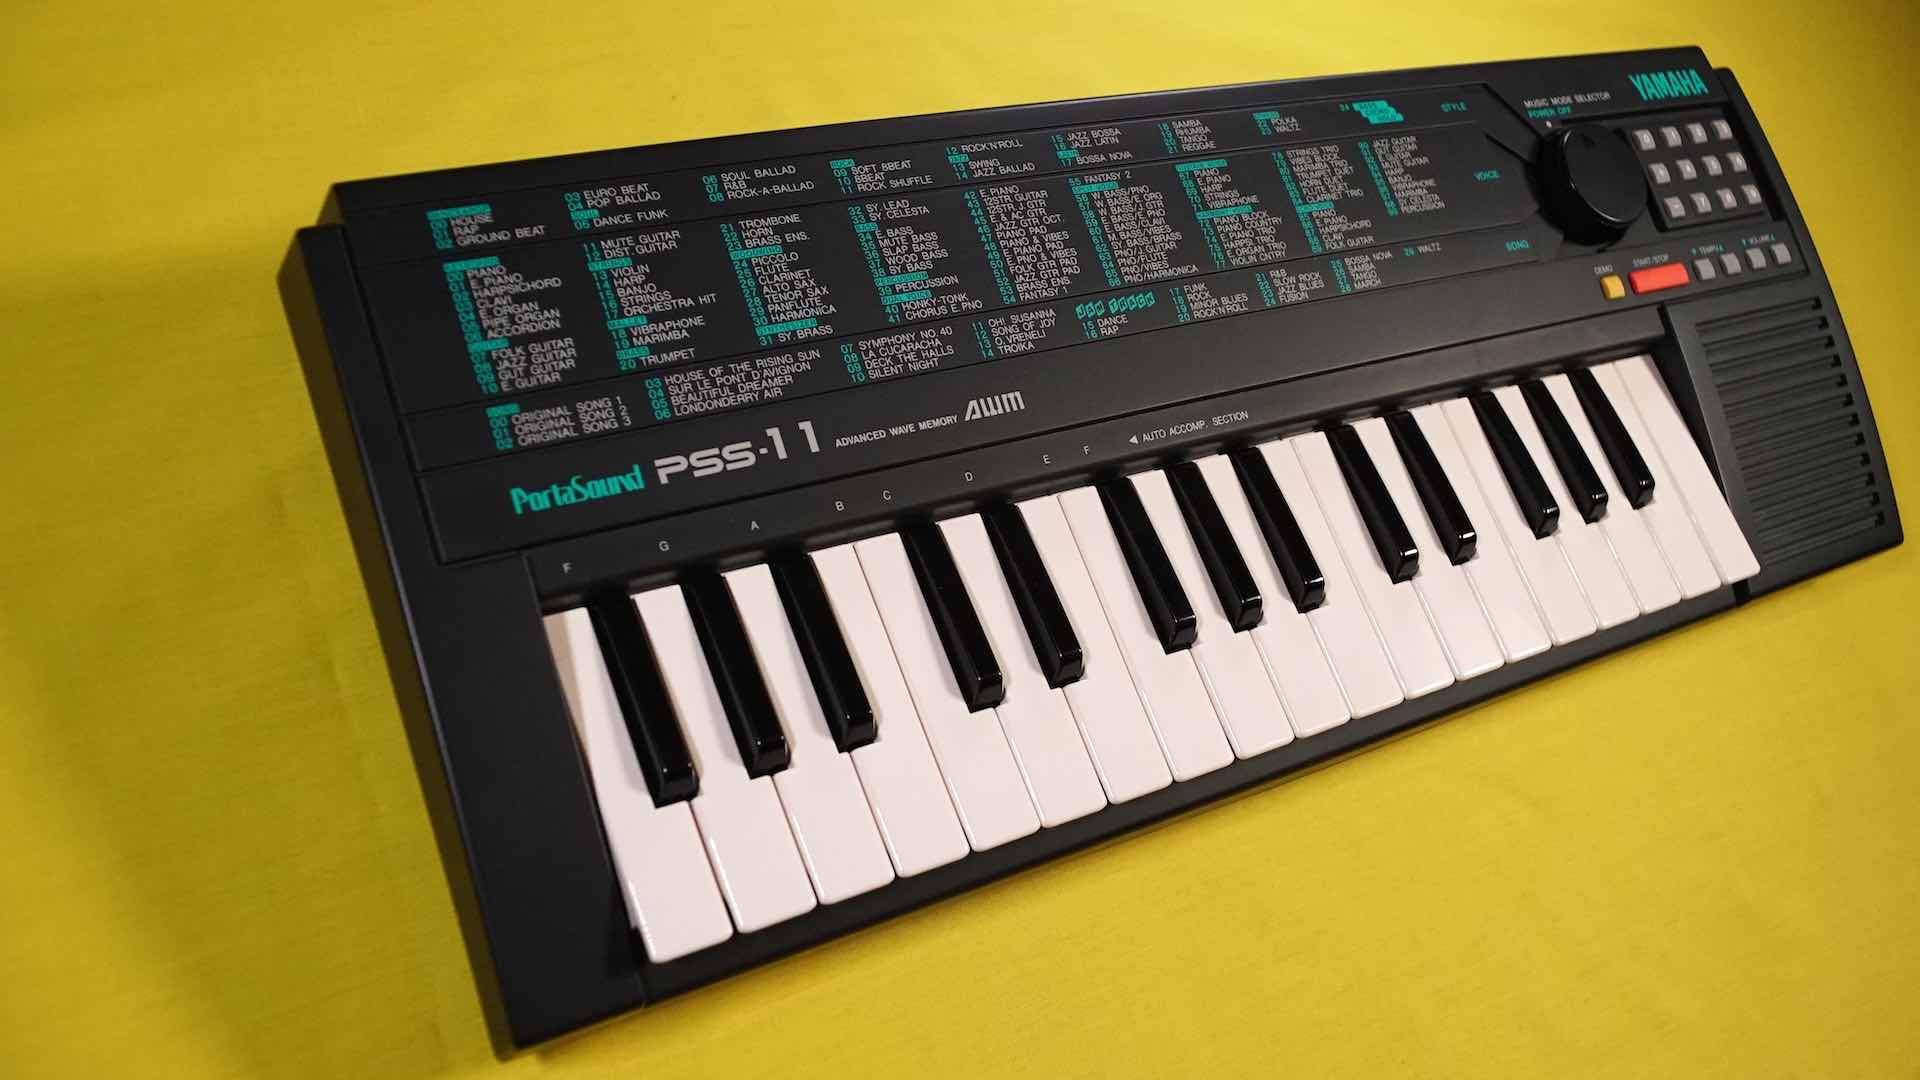 Yamaha PSS-11 keyboard against a yellow background